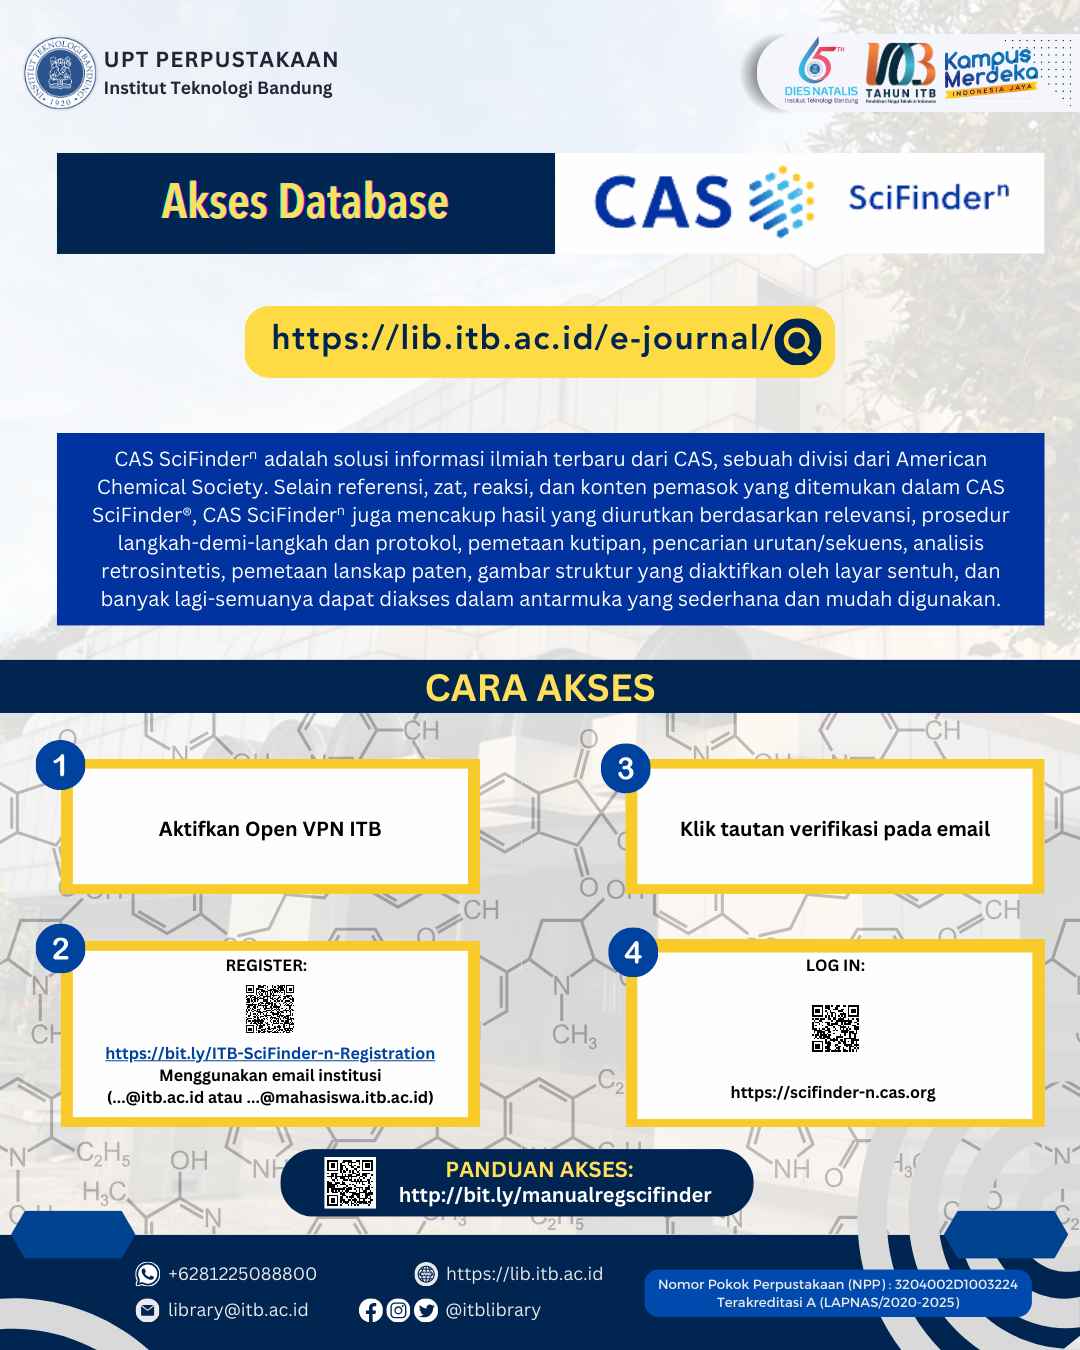 Perpustakaan ITB berlangganan akses CAS SciFinder